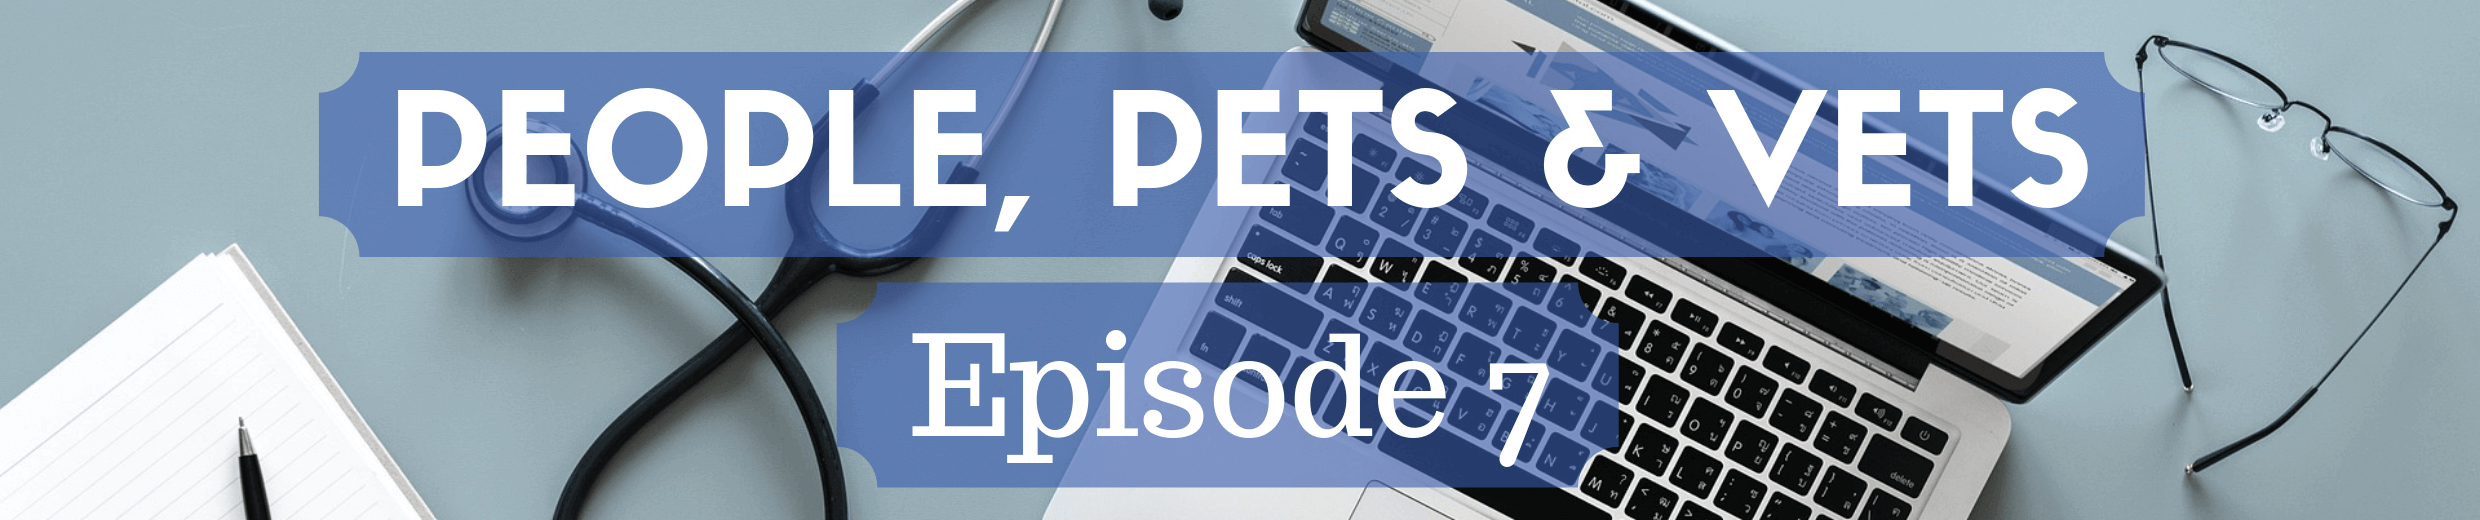 People, Pets & Vets: Episode 7